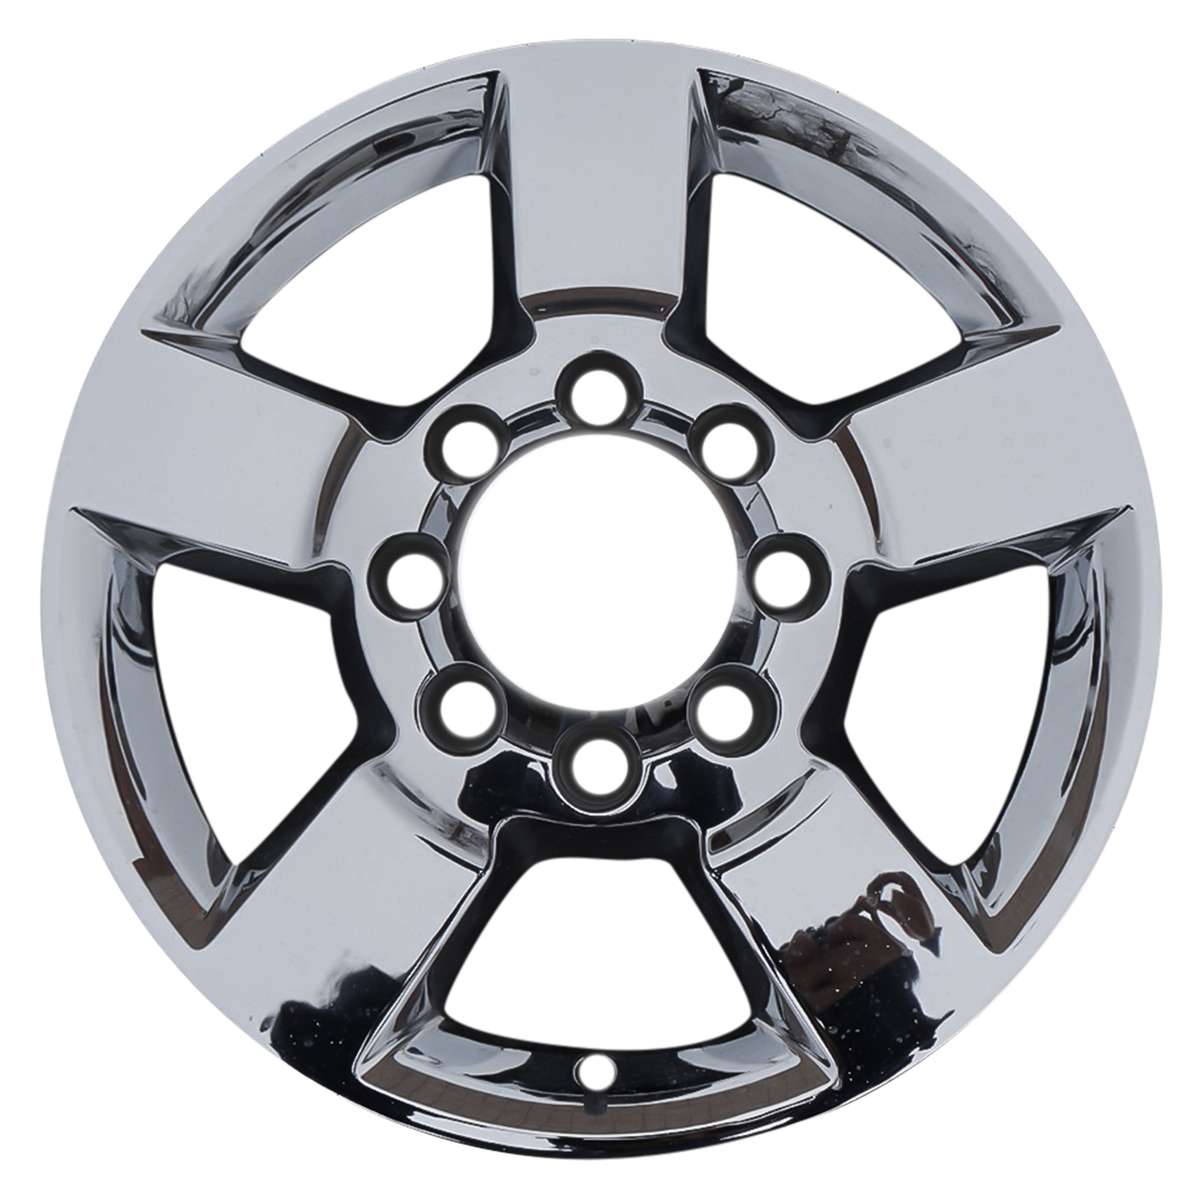 2015 GMC Sierra 2500 20" OEM Wheel Rim W5771CHR